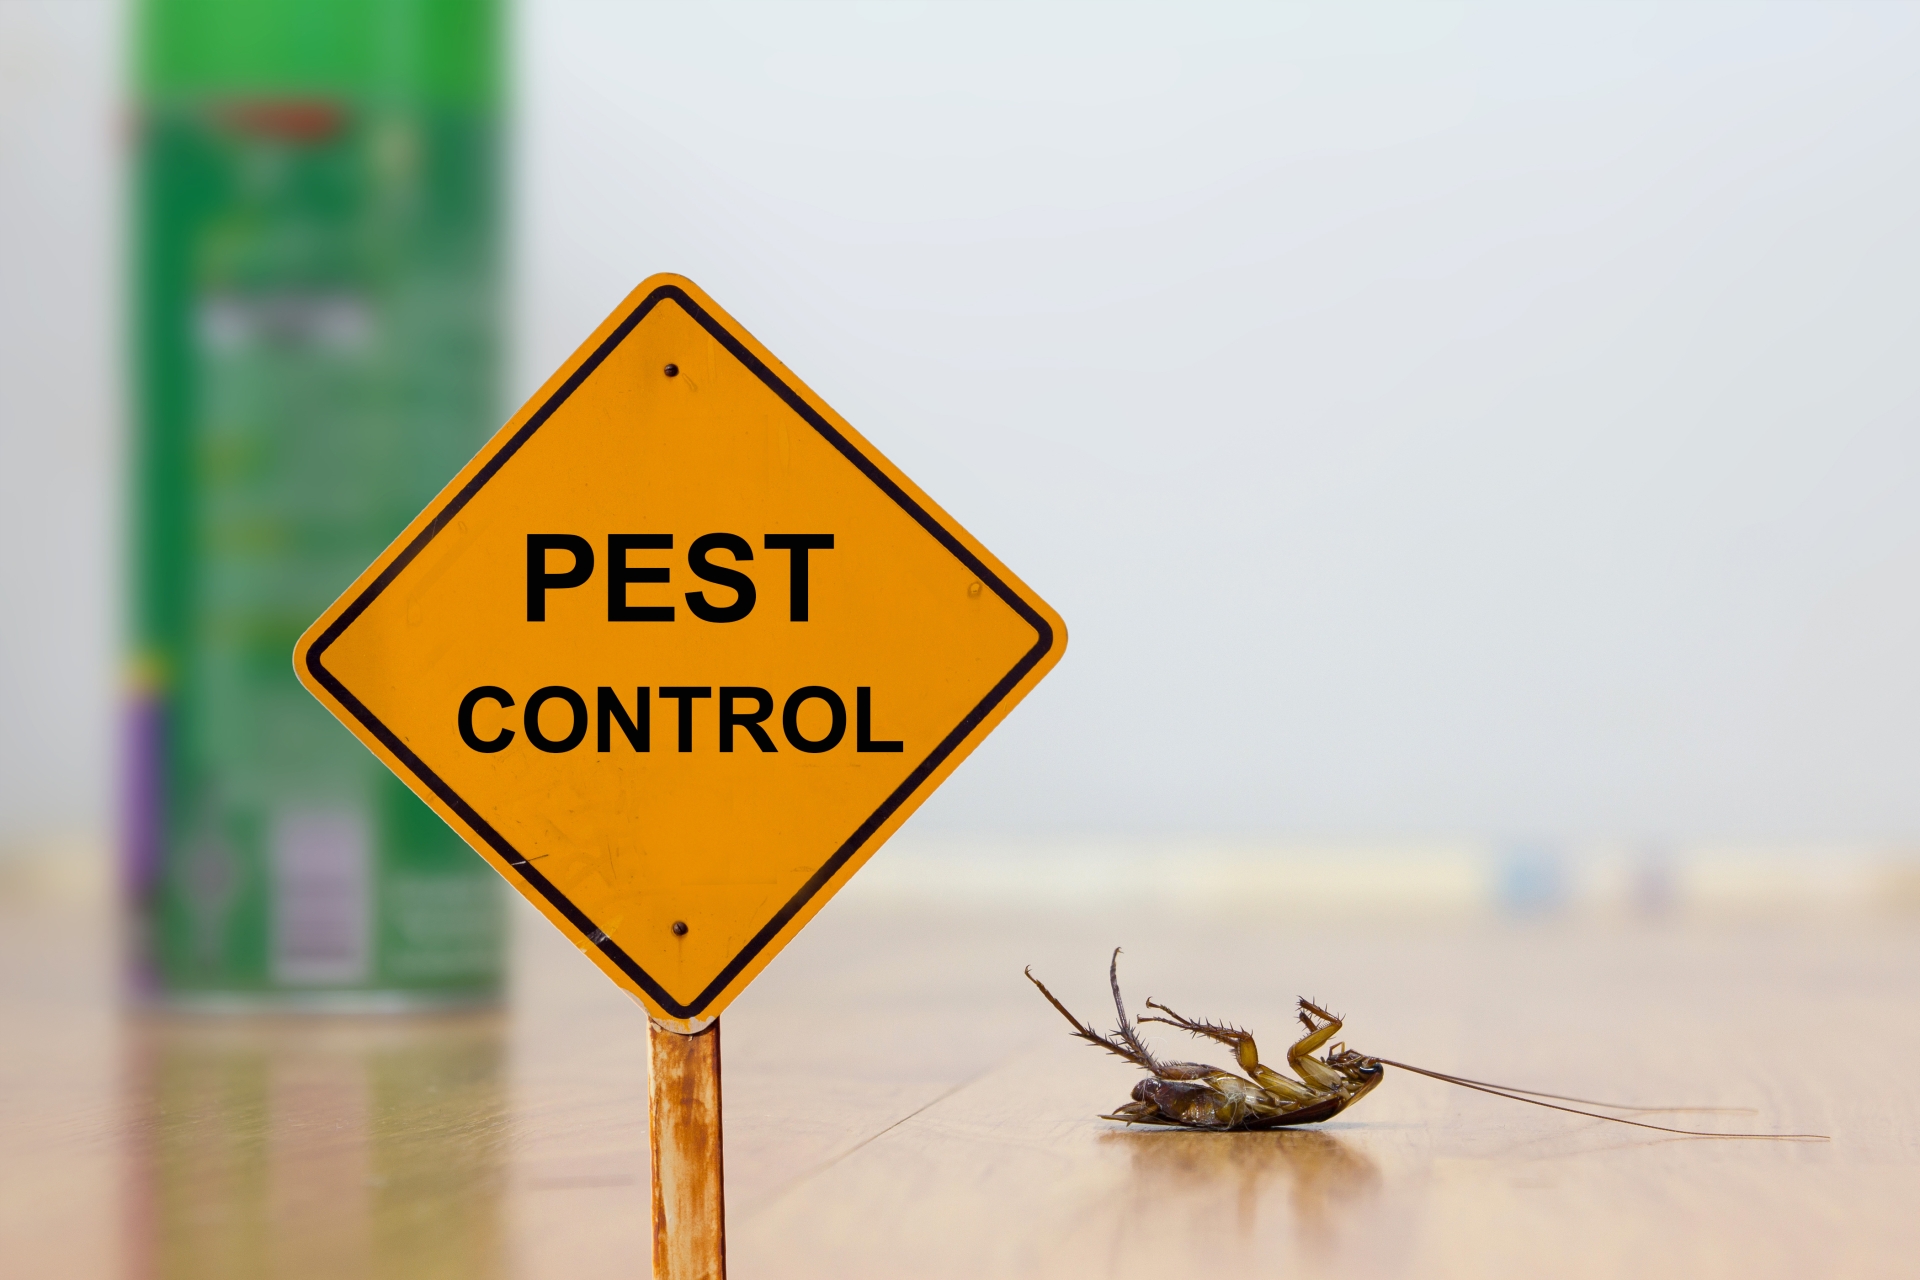 24 Hour Pest Control, Pest Control in Mile End, Stepney, E1. Call Now 020 8166 9746